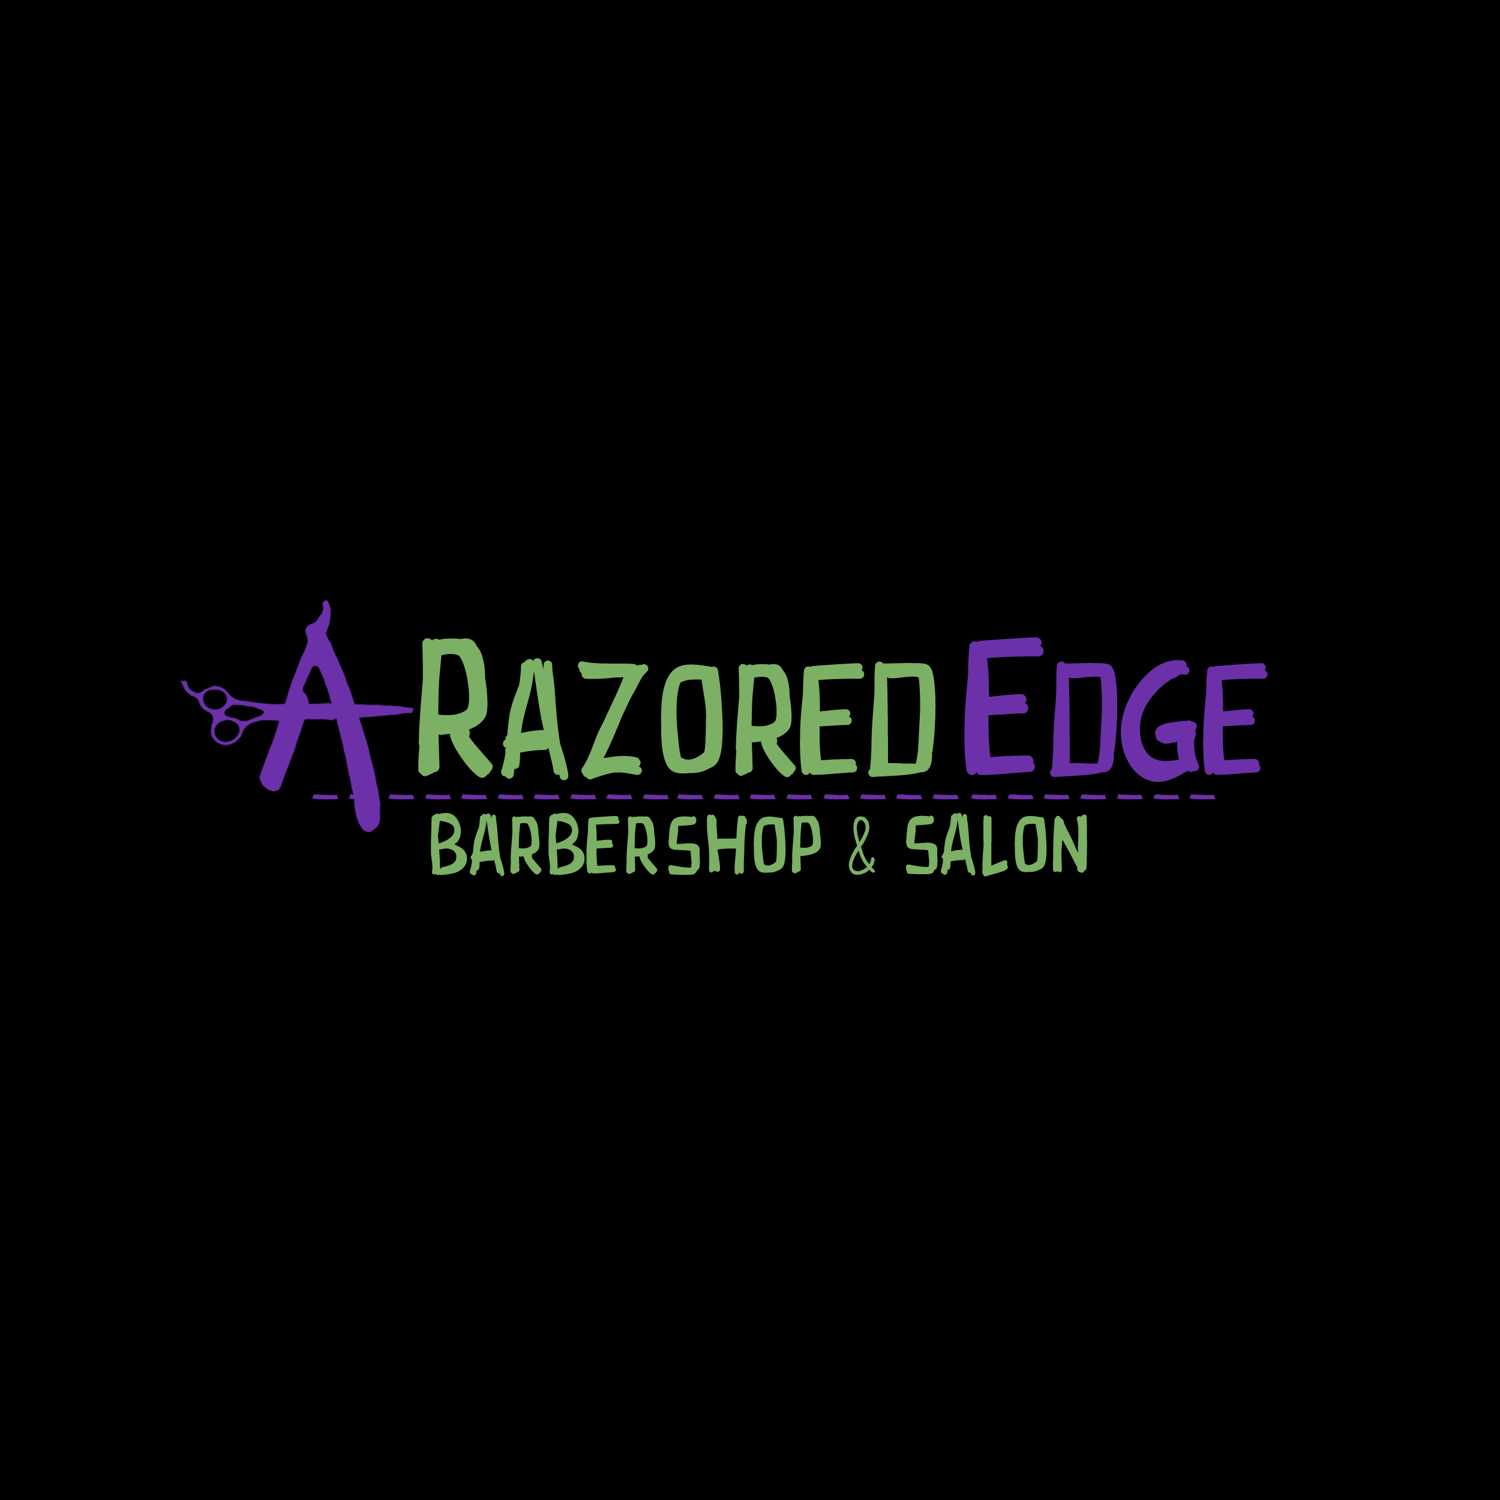 A Razored Edge Barbershop & Salon - custom logo design, Harrisburg, Pennsylvania